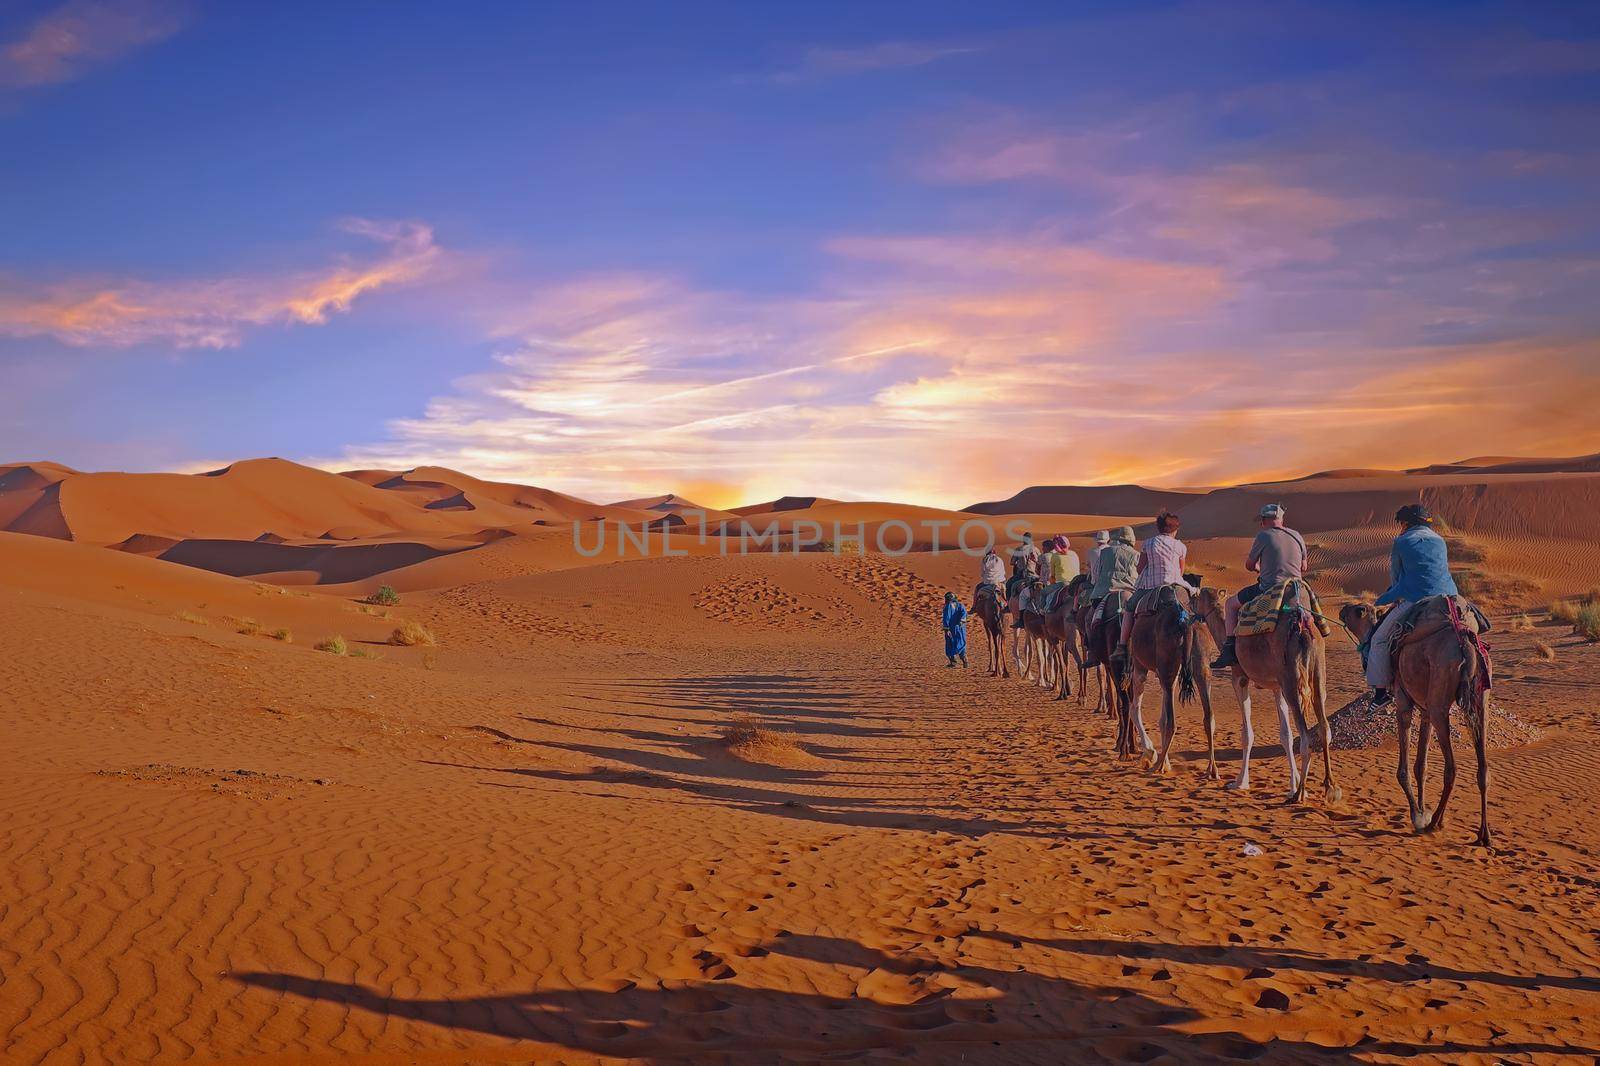 Camel caravan going through the Sahara Desert in Morocco Africa by devy